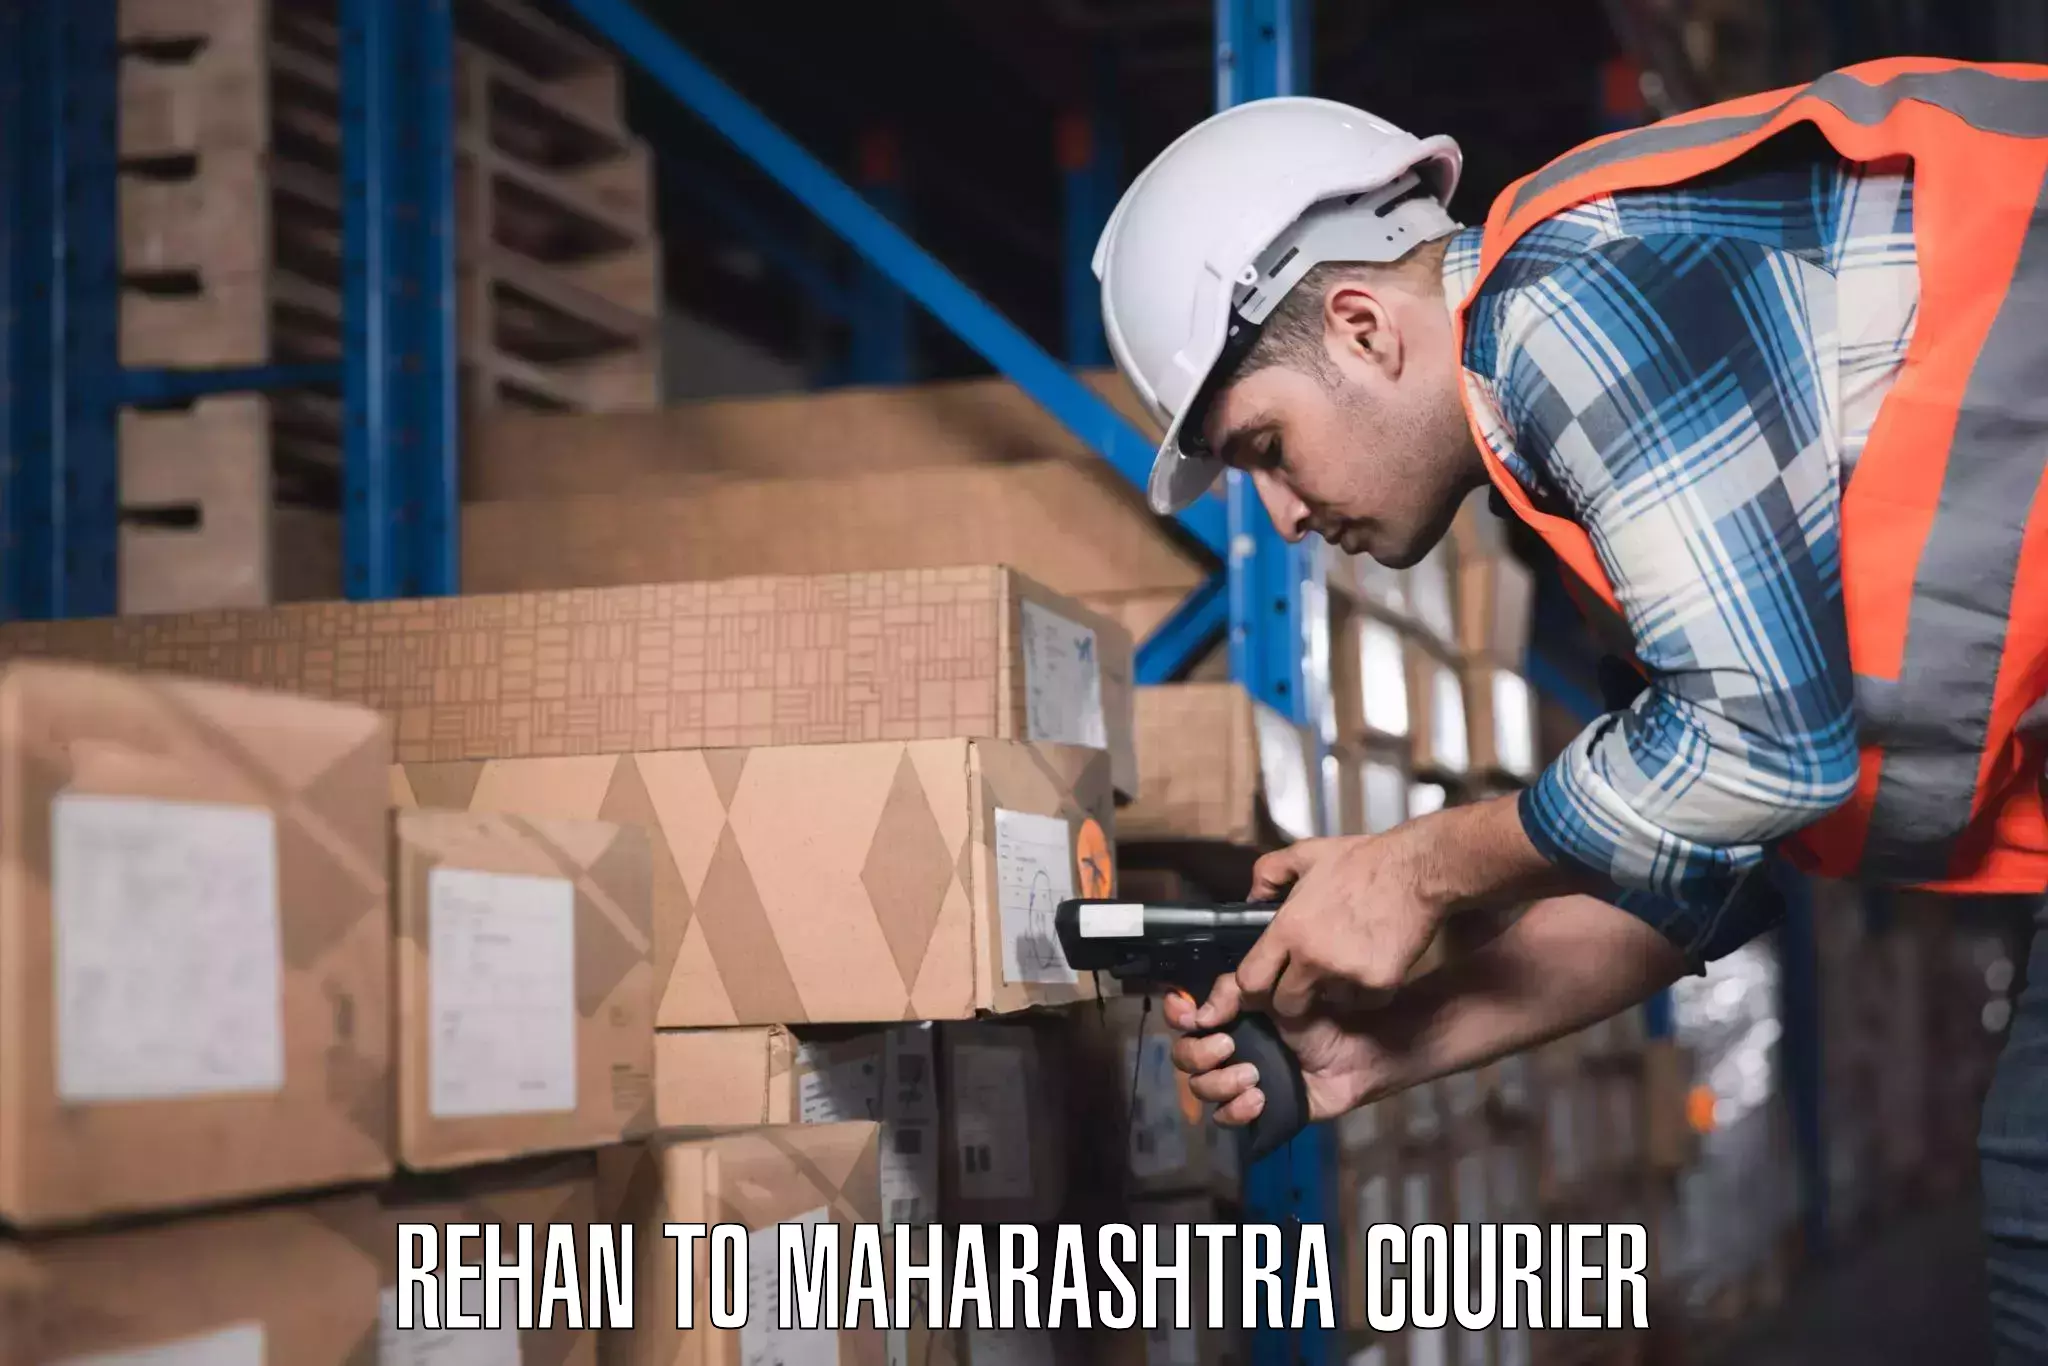 Luggage shipment specialists Rehan to Maharashtra